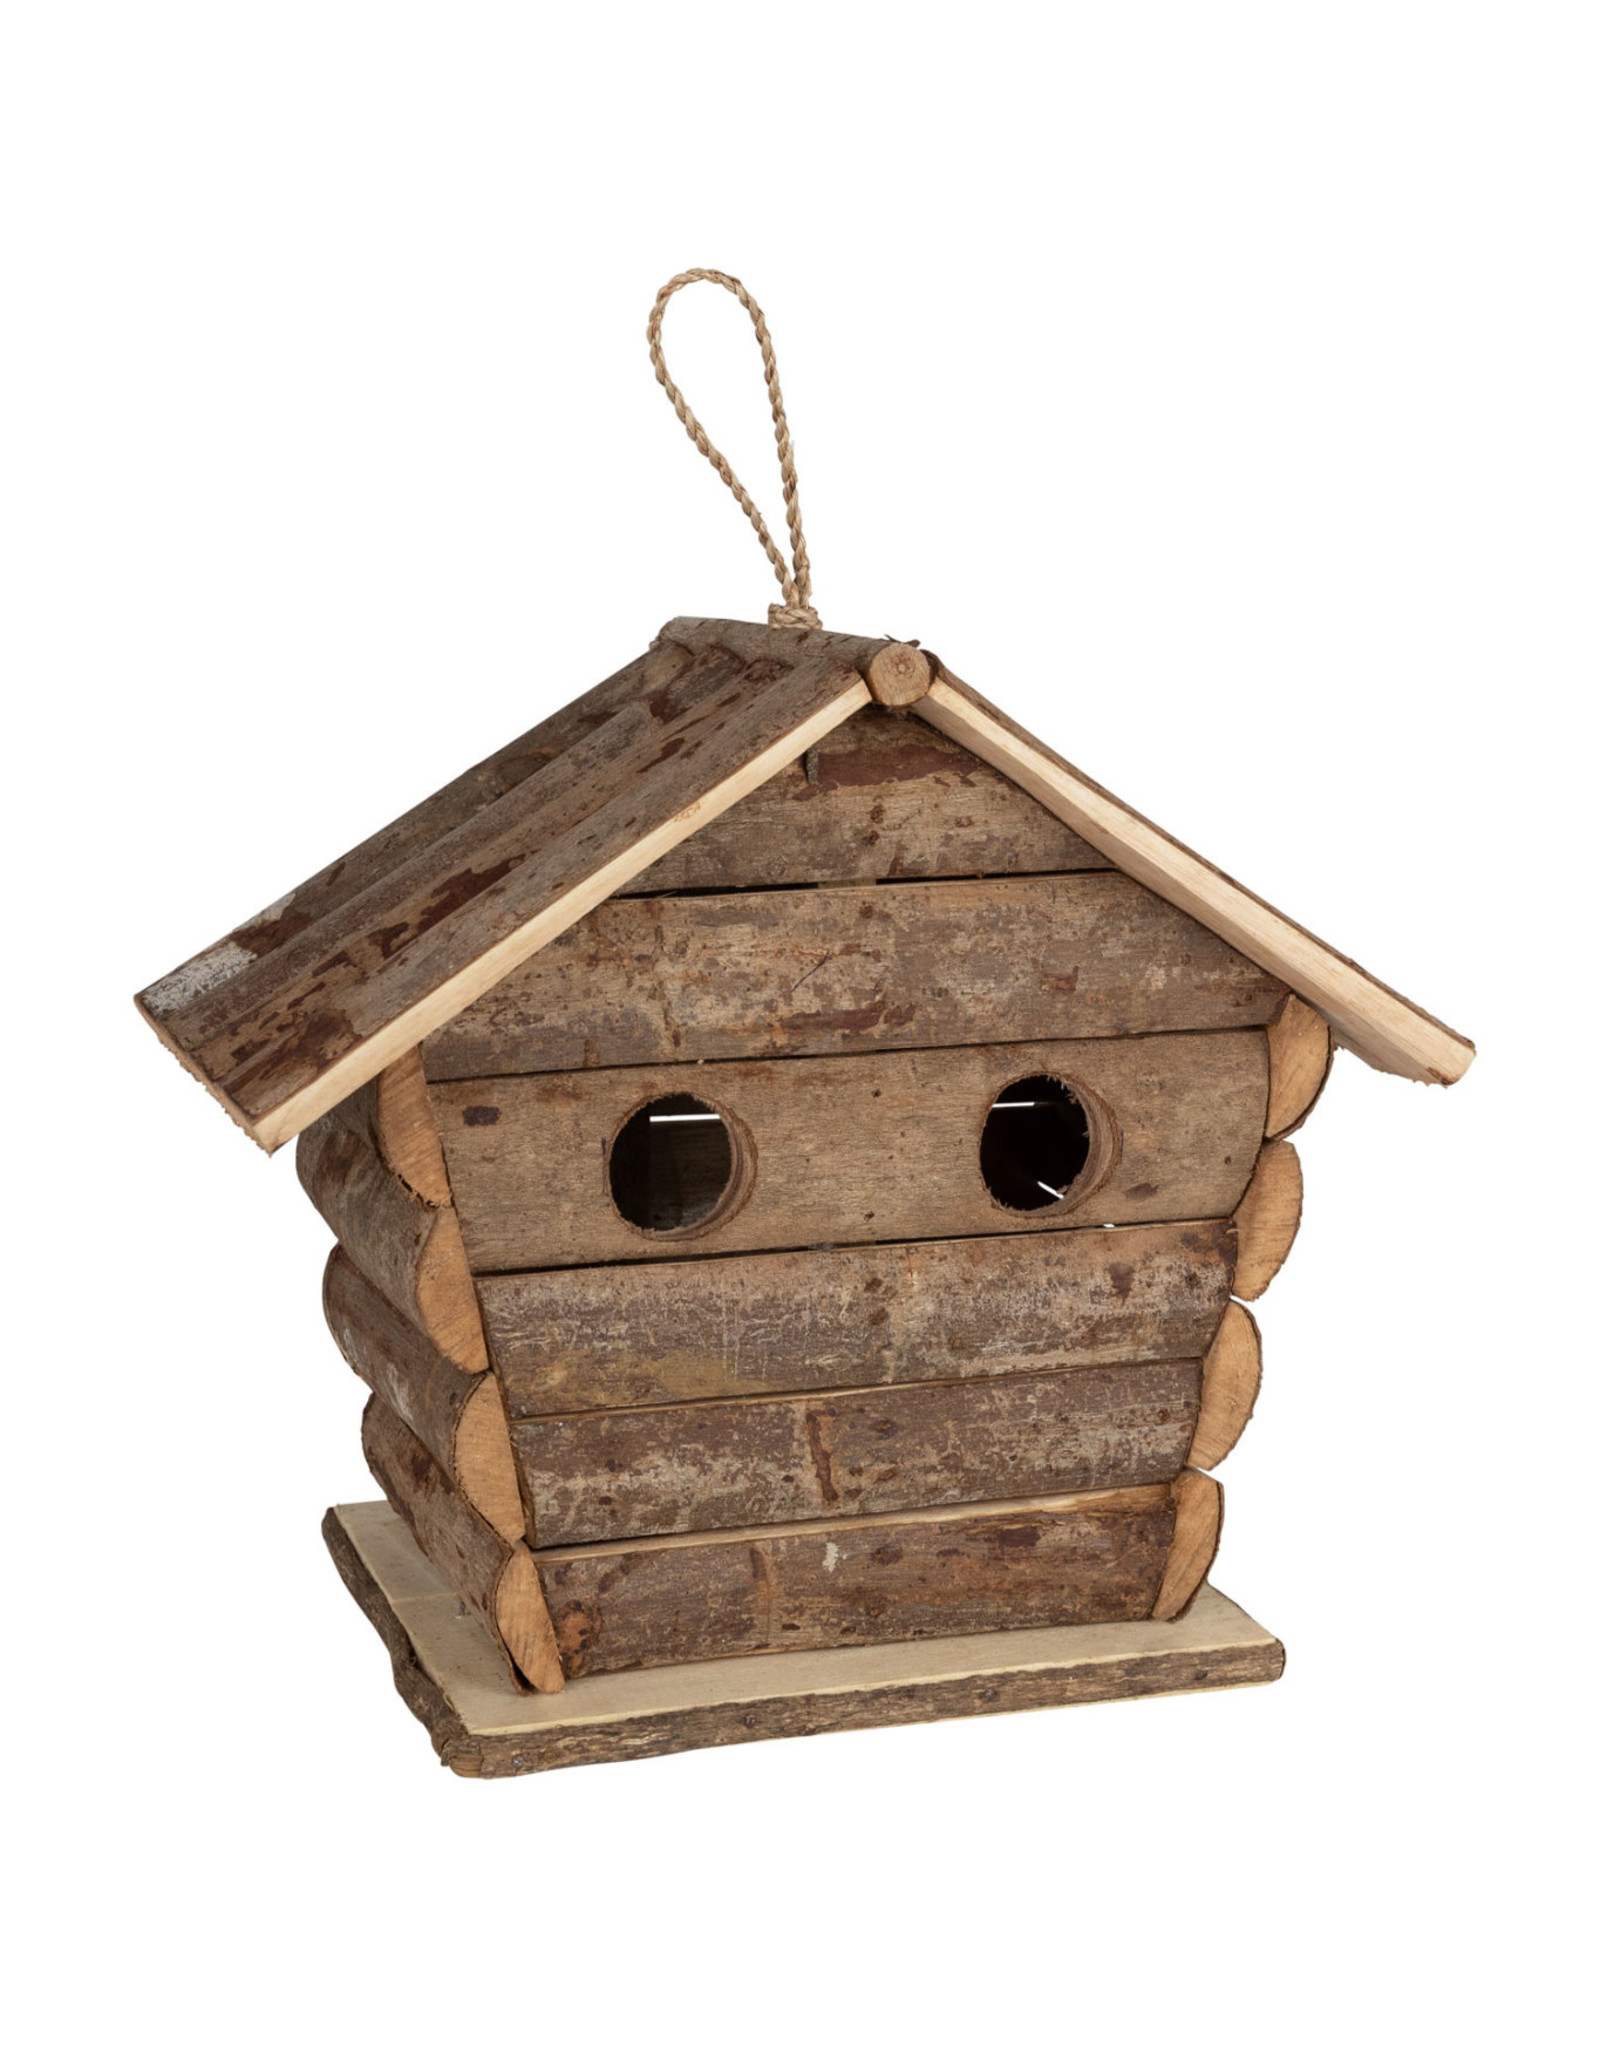 Ten Thousand Villages Rustic Wood Birdhouse